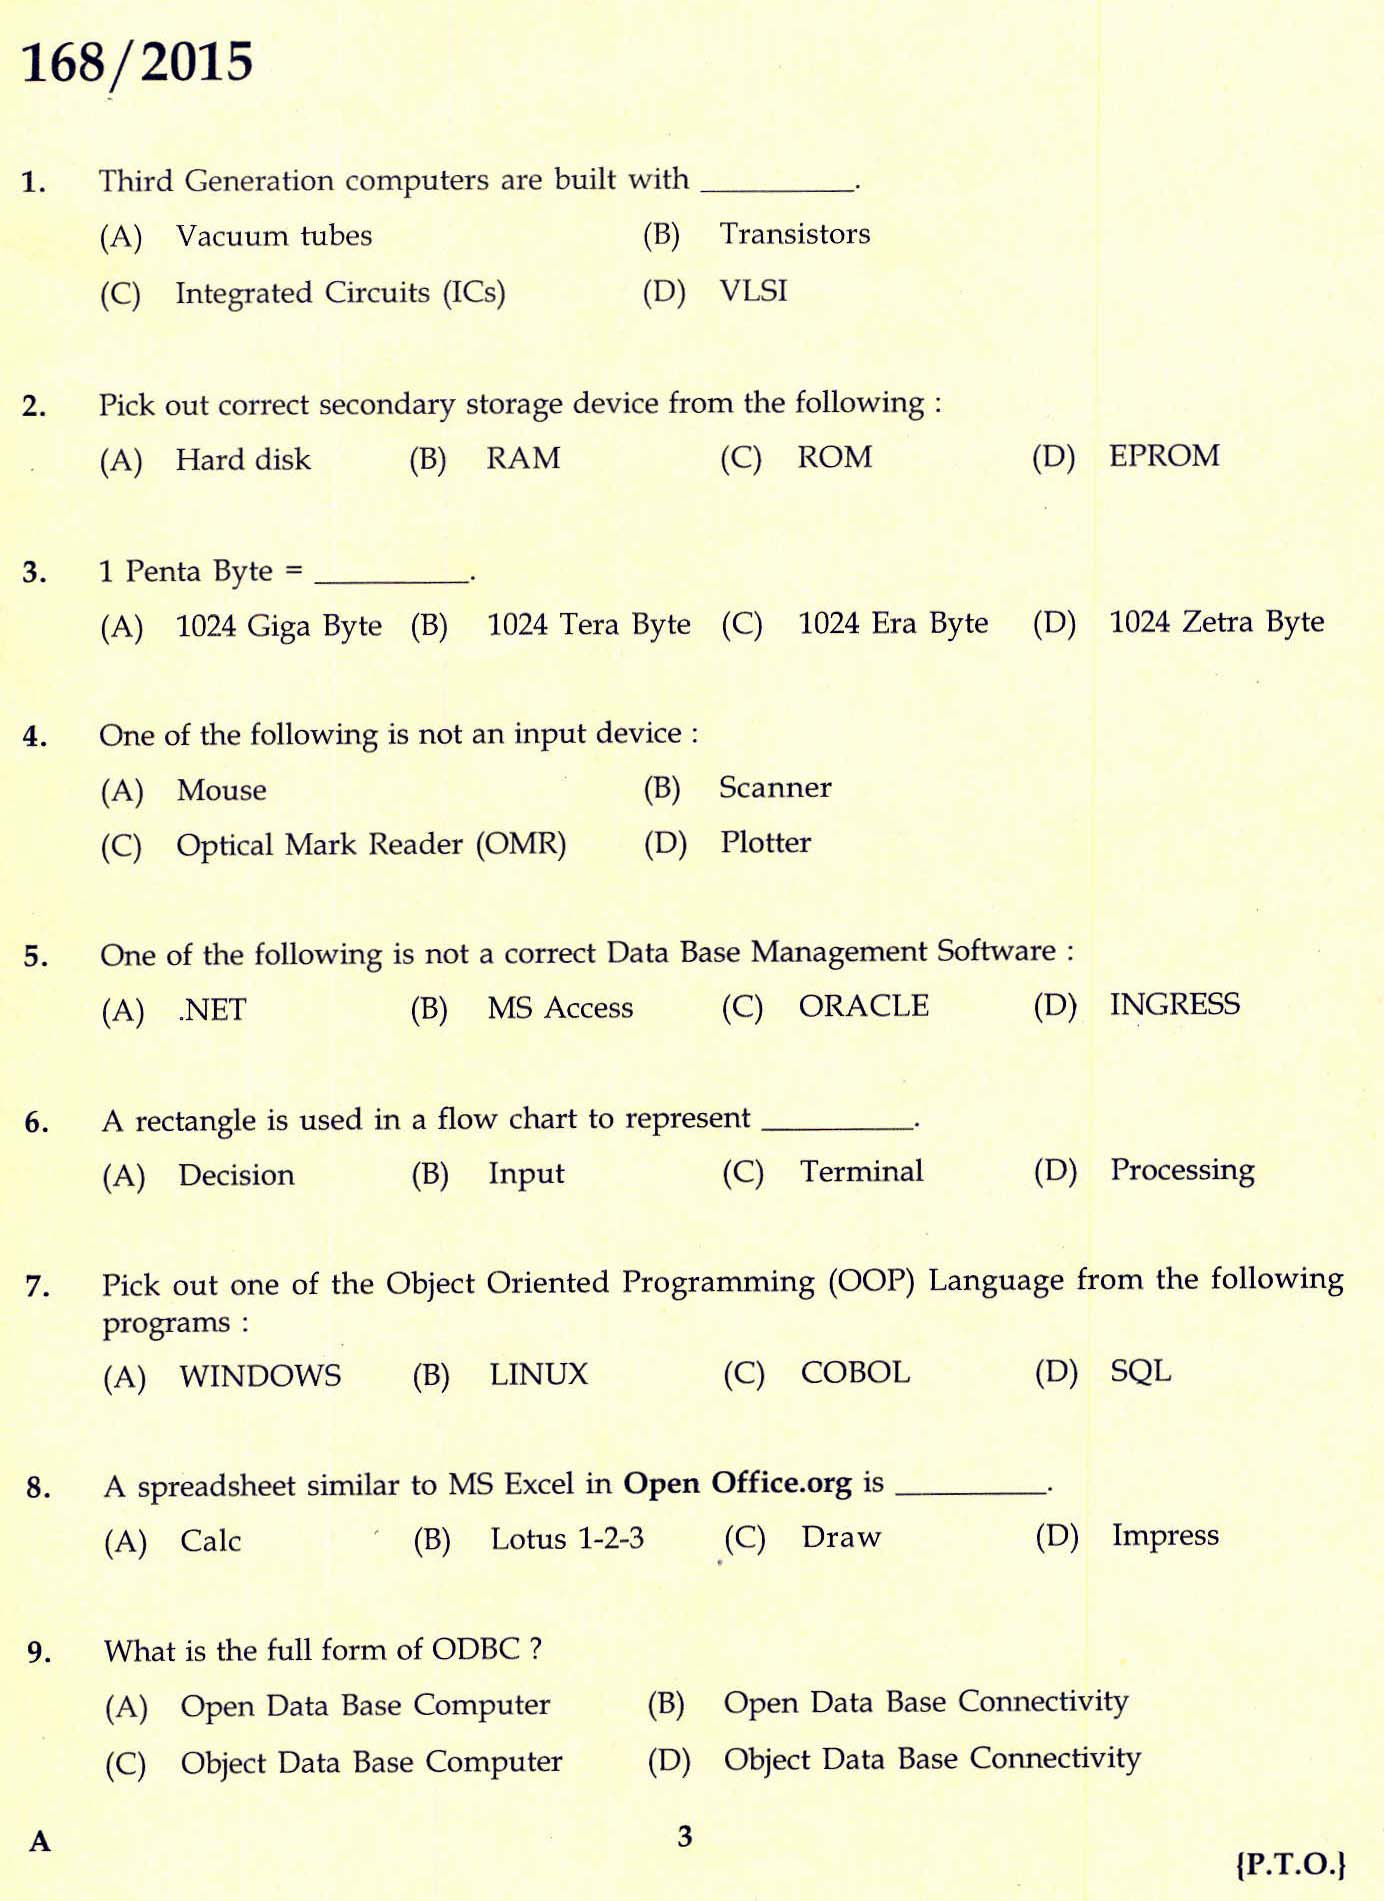 Kerala PSC Confidential Assistant Grade II Kerala Water Authority Exam 2015 Question Paper Code 1682015 1